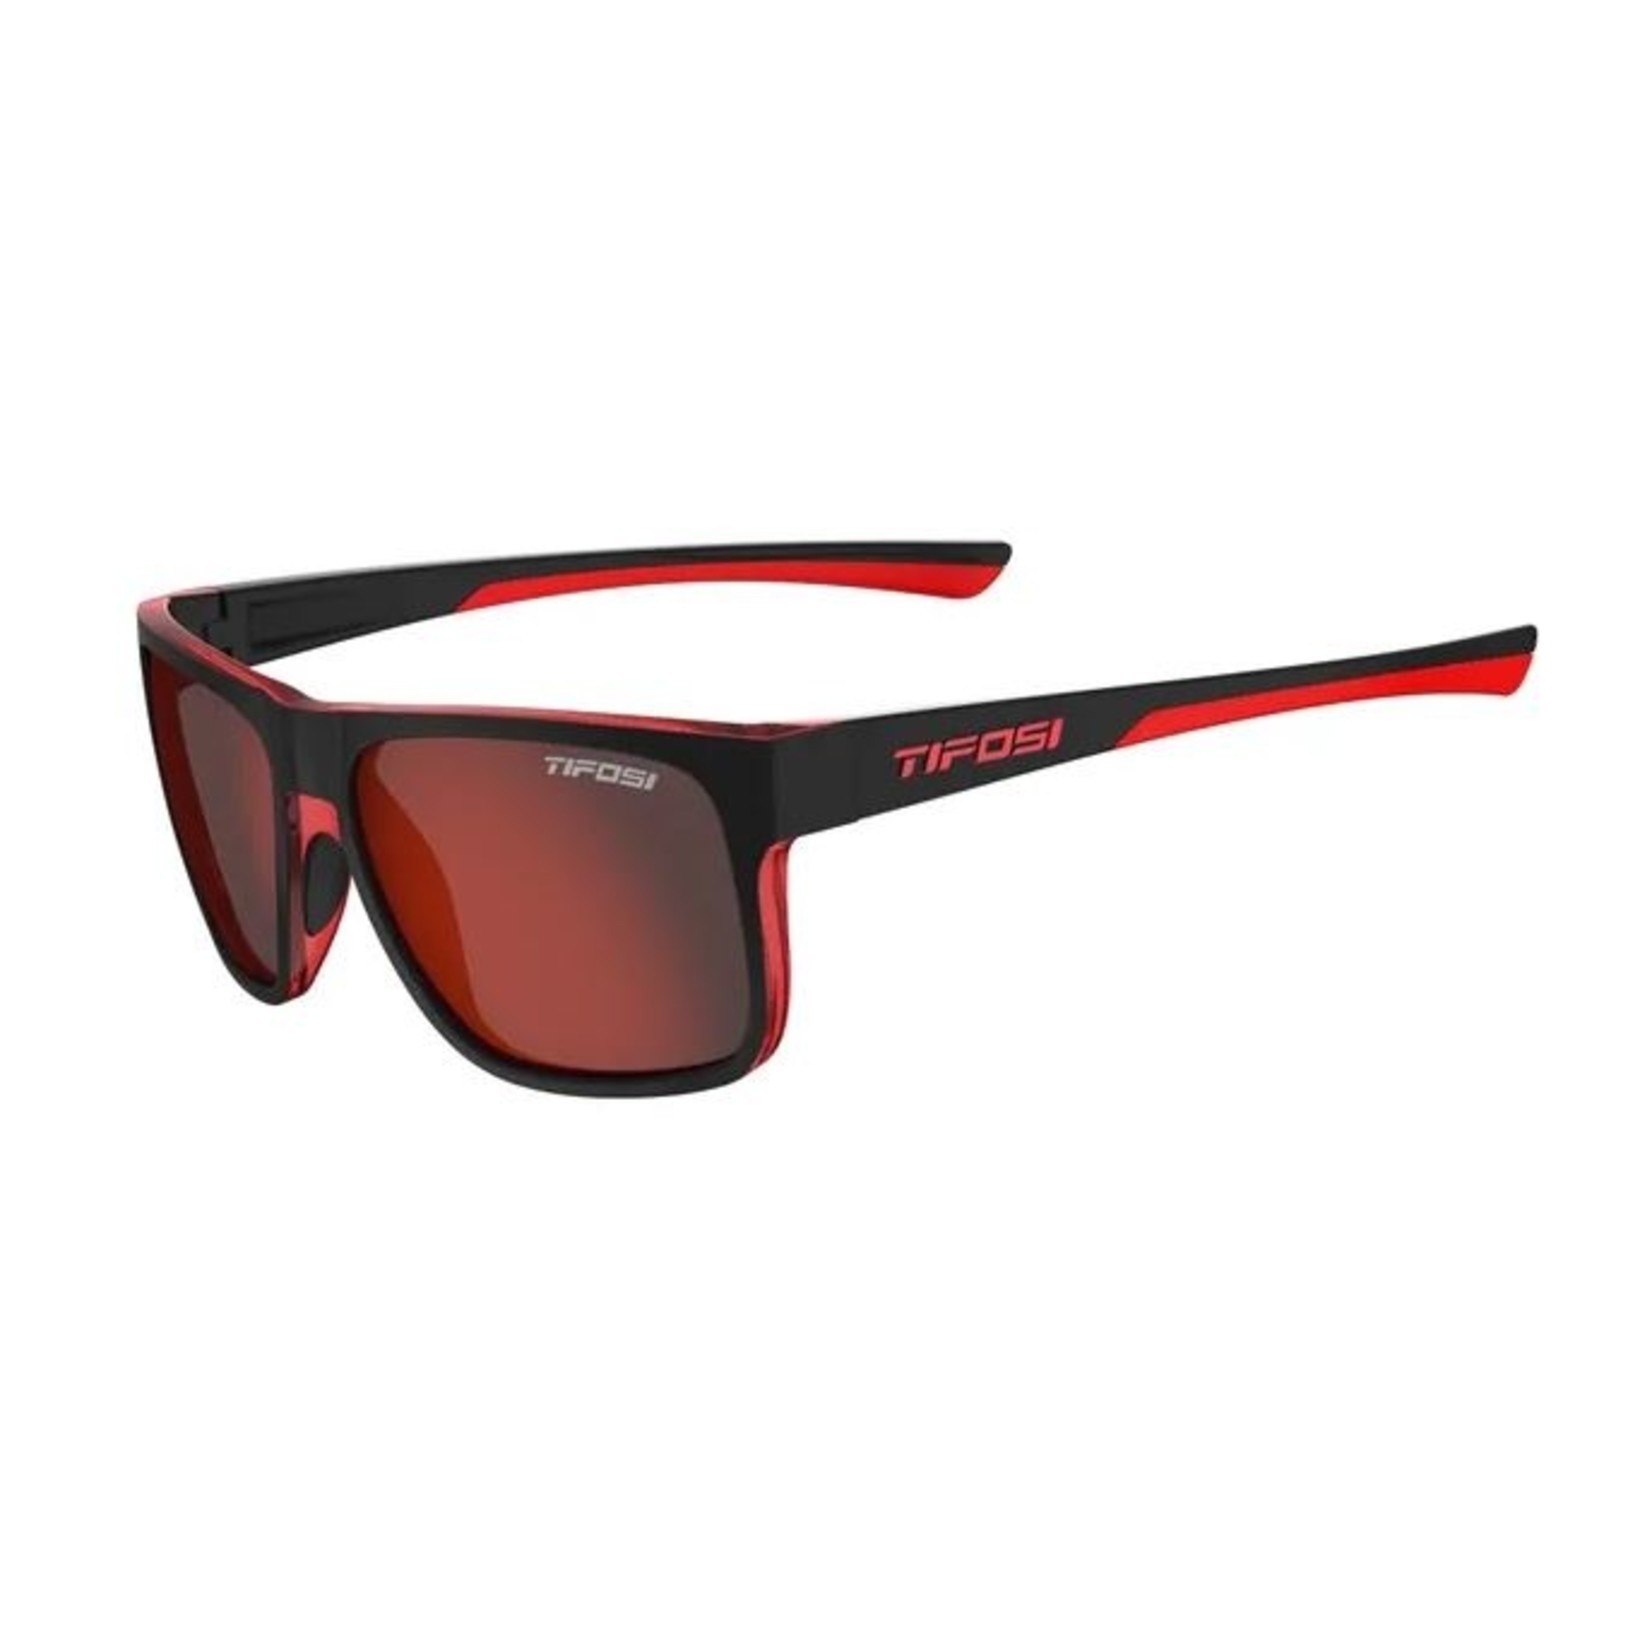 Tifosi Tifosi Cycling Sunglasses - Swick - Smoke Red Lens - Satin Black/Crimson